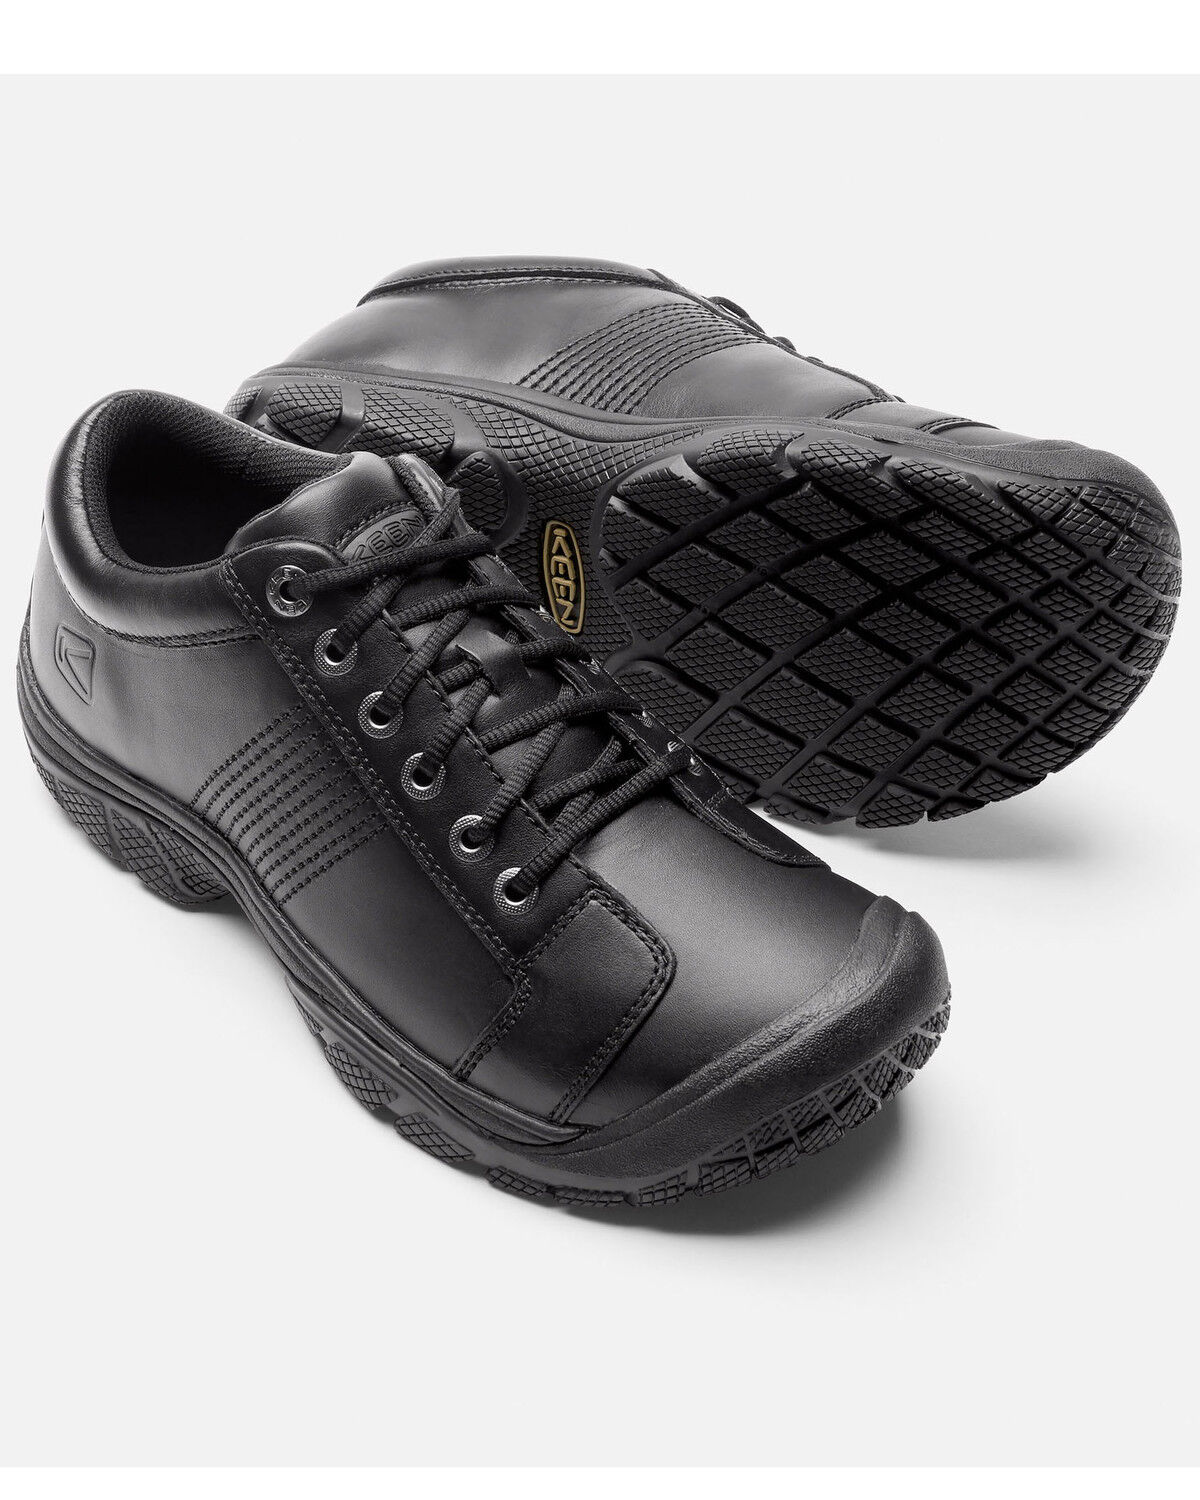 keen black work shoes